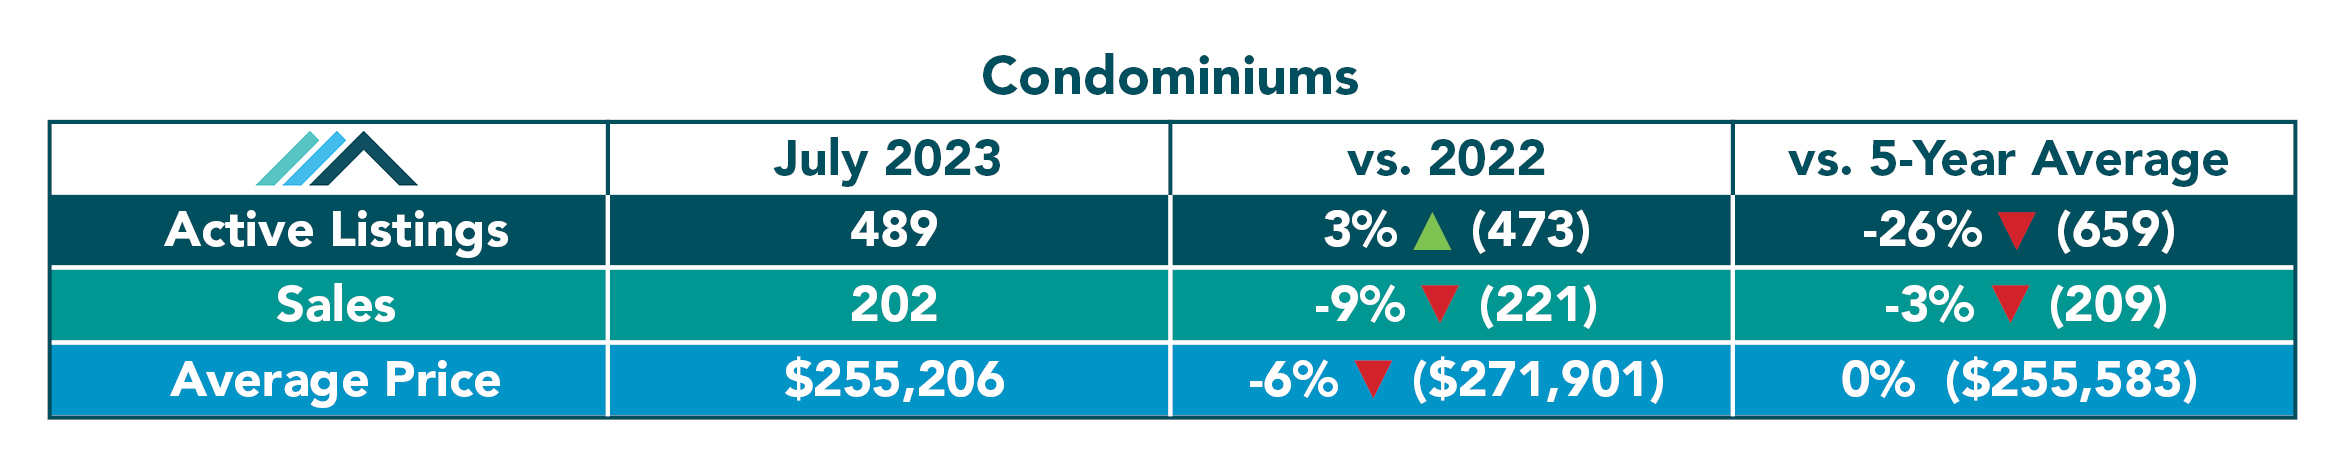 Condominium Tables July 2023.jpg (421 KB)